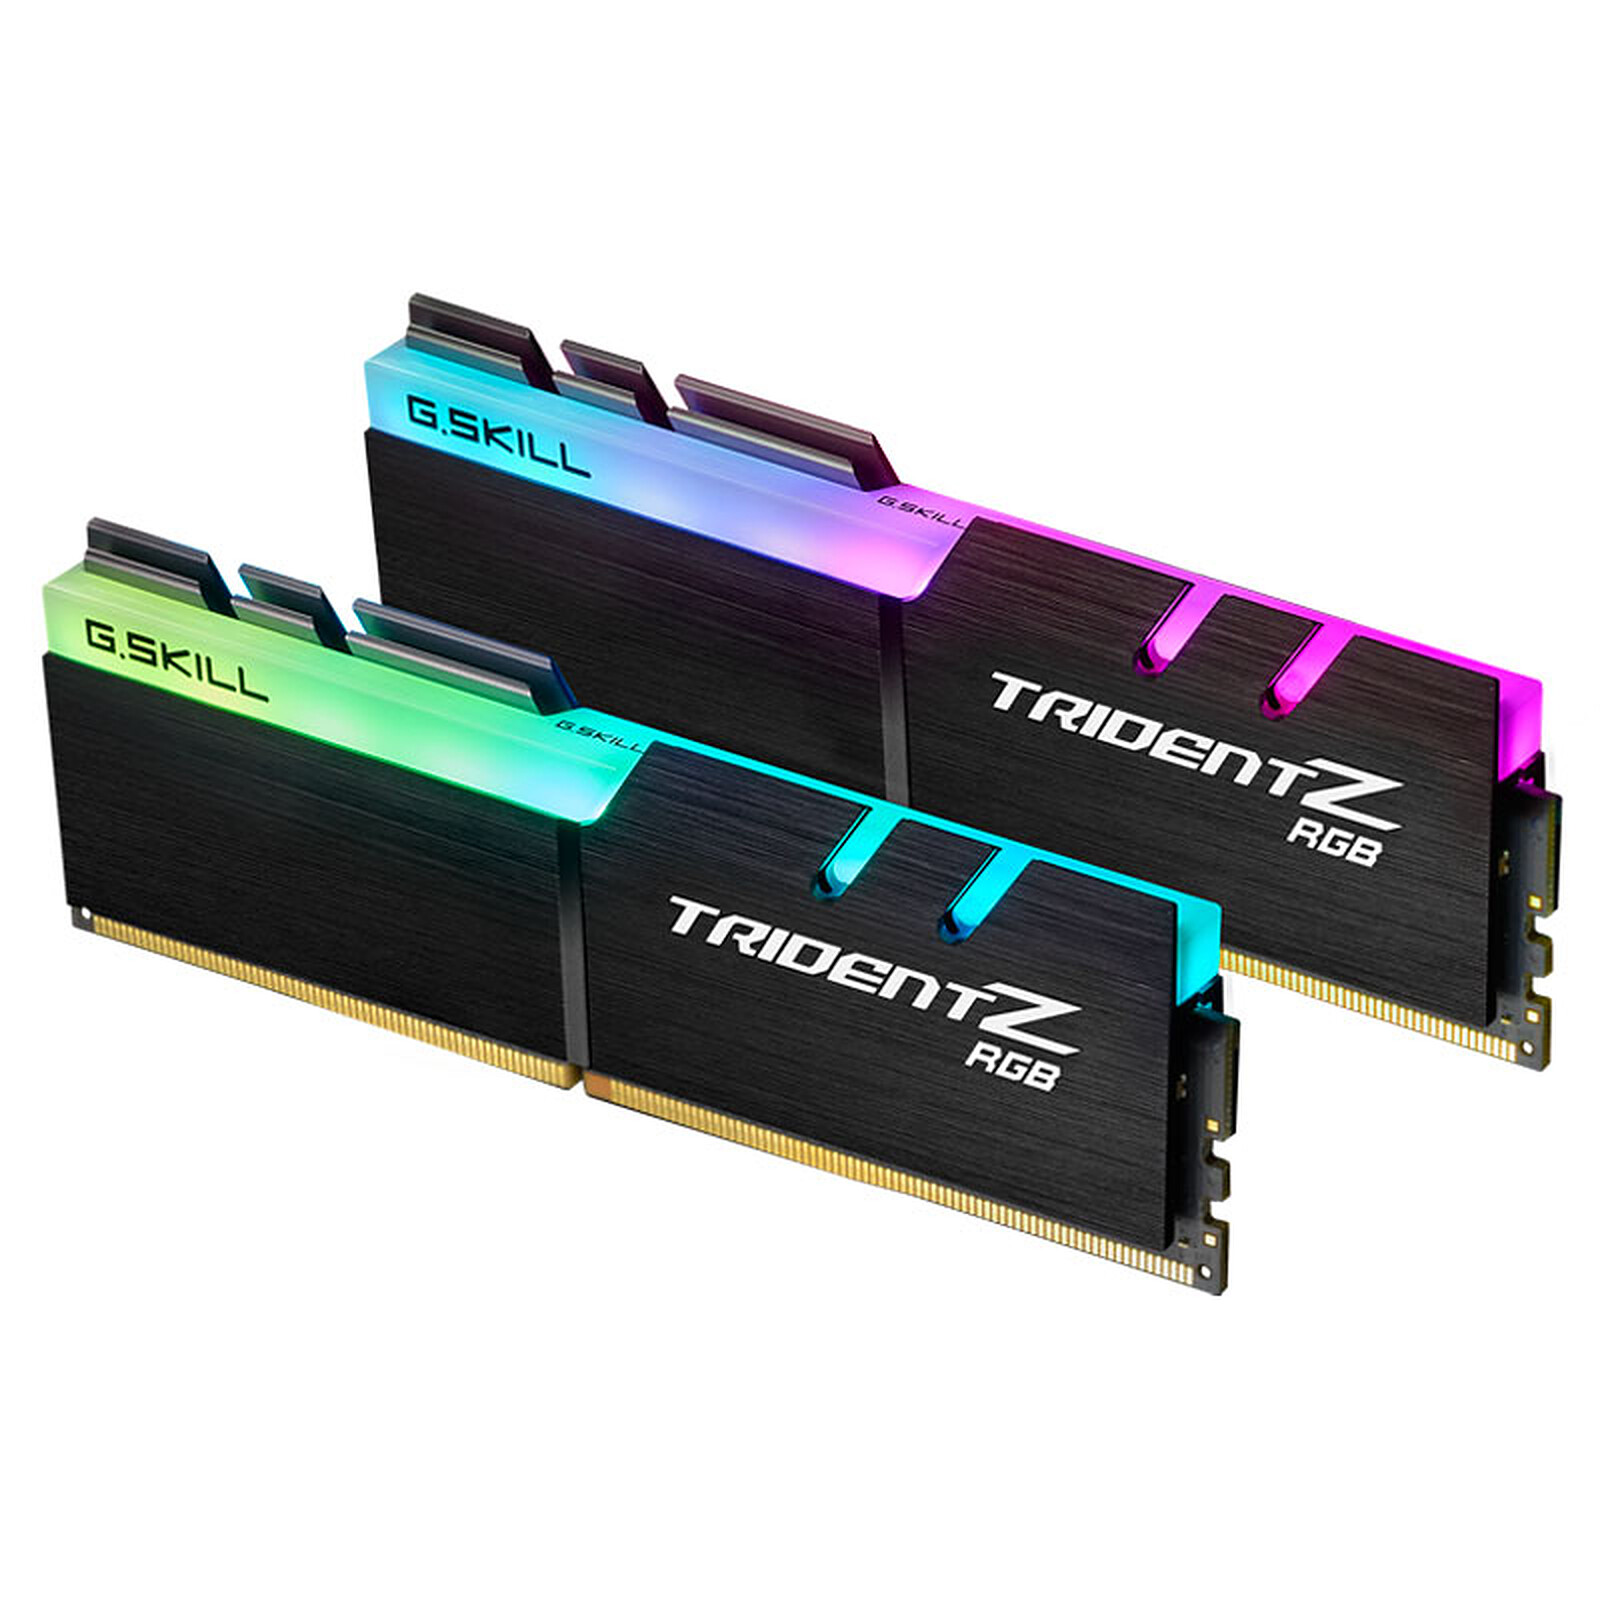 Trident Z RGB 32GB (2x16GB) DDR4 4266MHz CL16 - PC RAM G.Skill on LDLC | Holy Moley